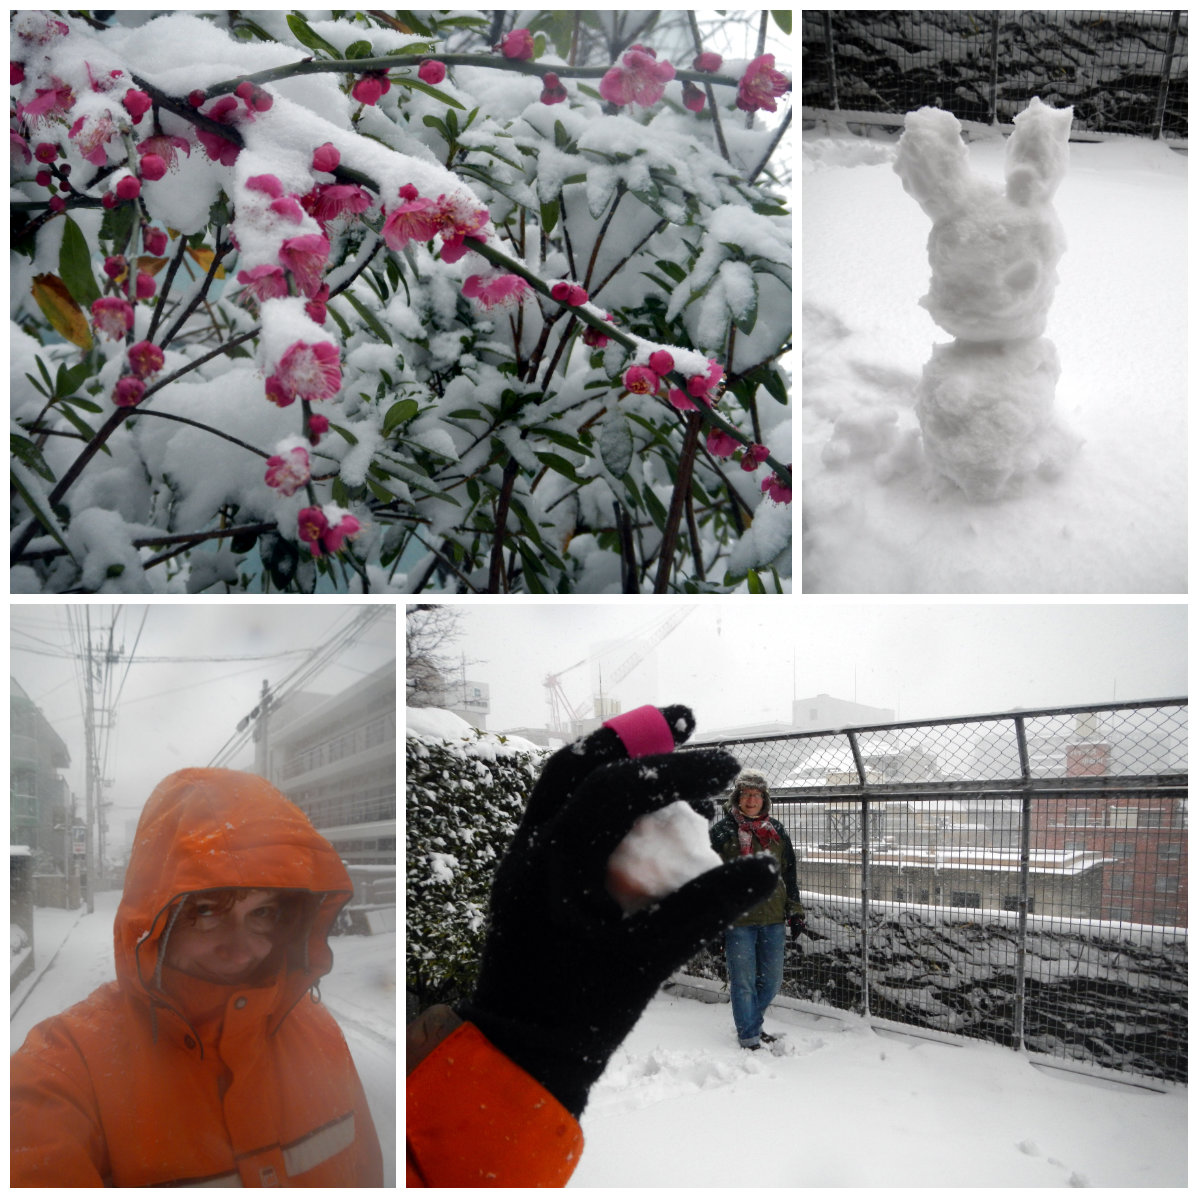 https://mt.mediatinker.com/blog/2014-02-08-snowday.jpg